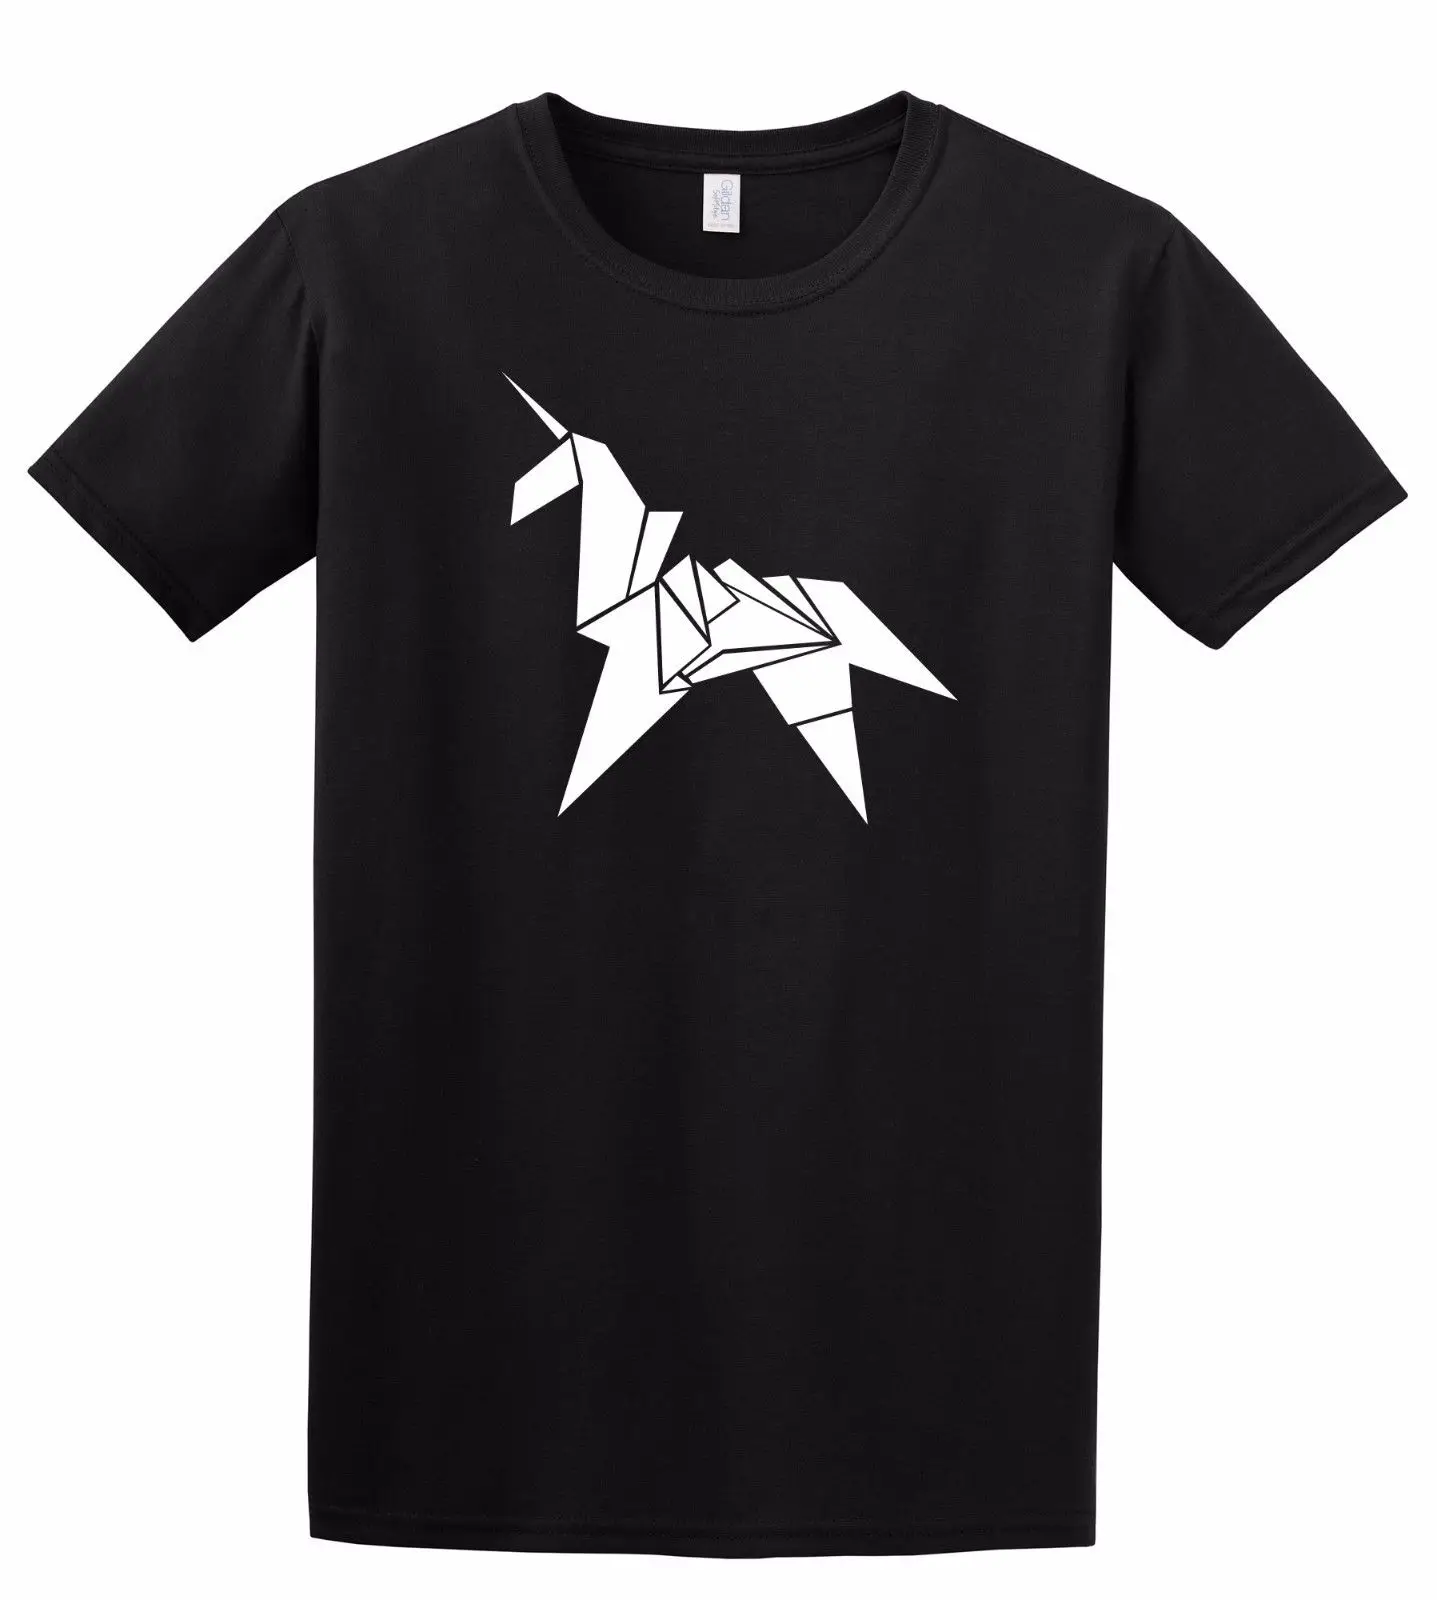 

Origami Unicorn - Blade Runner Sci Fi Replicant Film Movie Inspired T-shirt Cool Casual pride tshirt men Unisex New Fashion